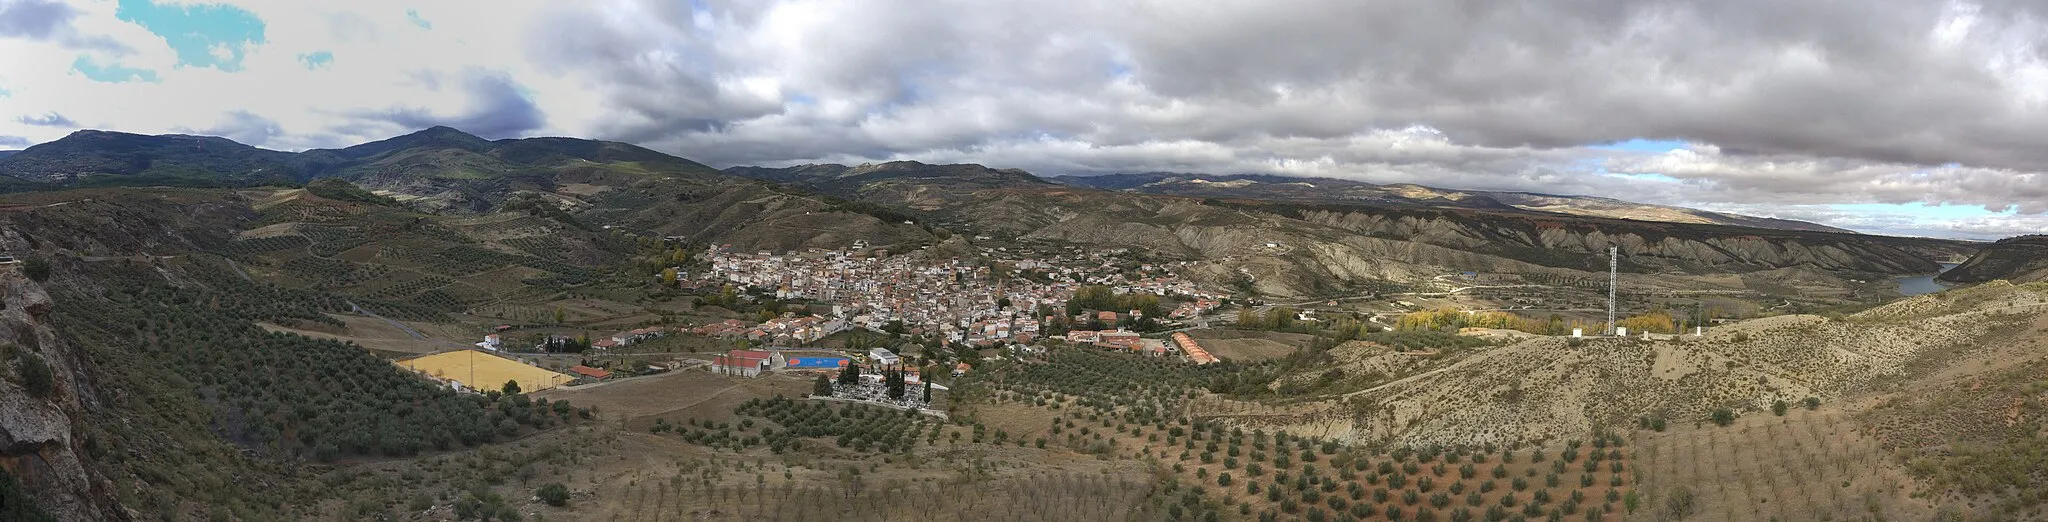 Photo showing: View of La Peza, in the province of Granada, Spain